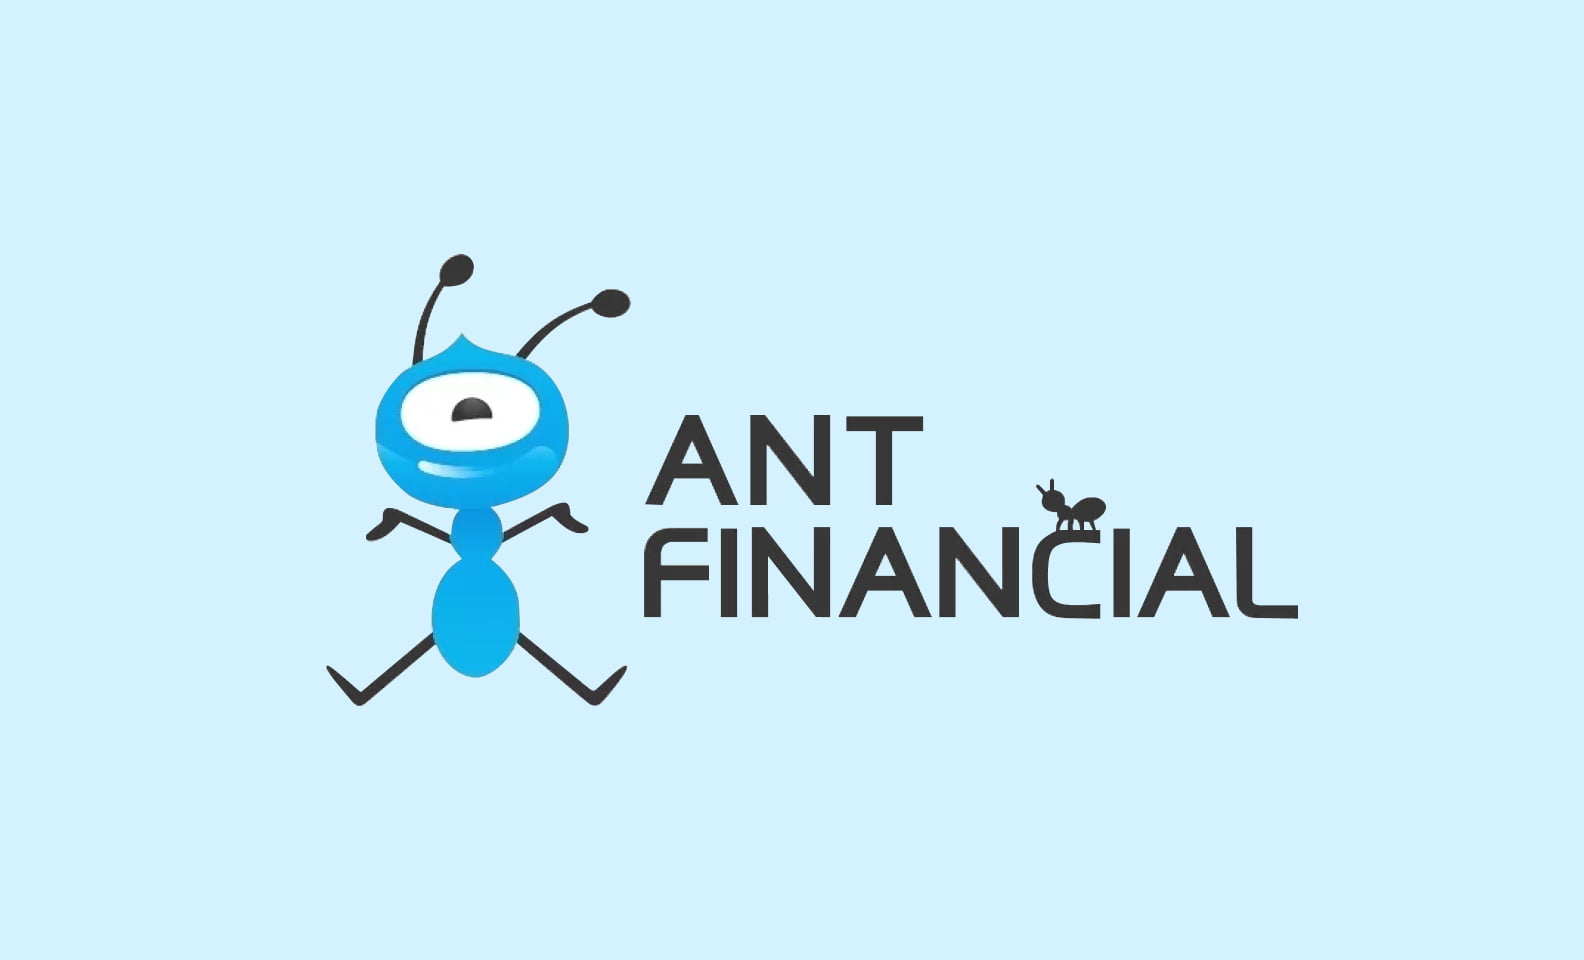 Ant Financial fintech company logo